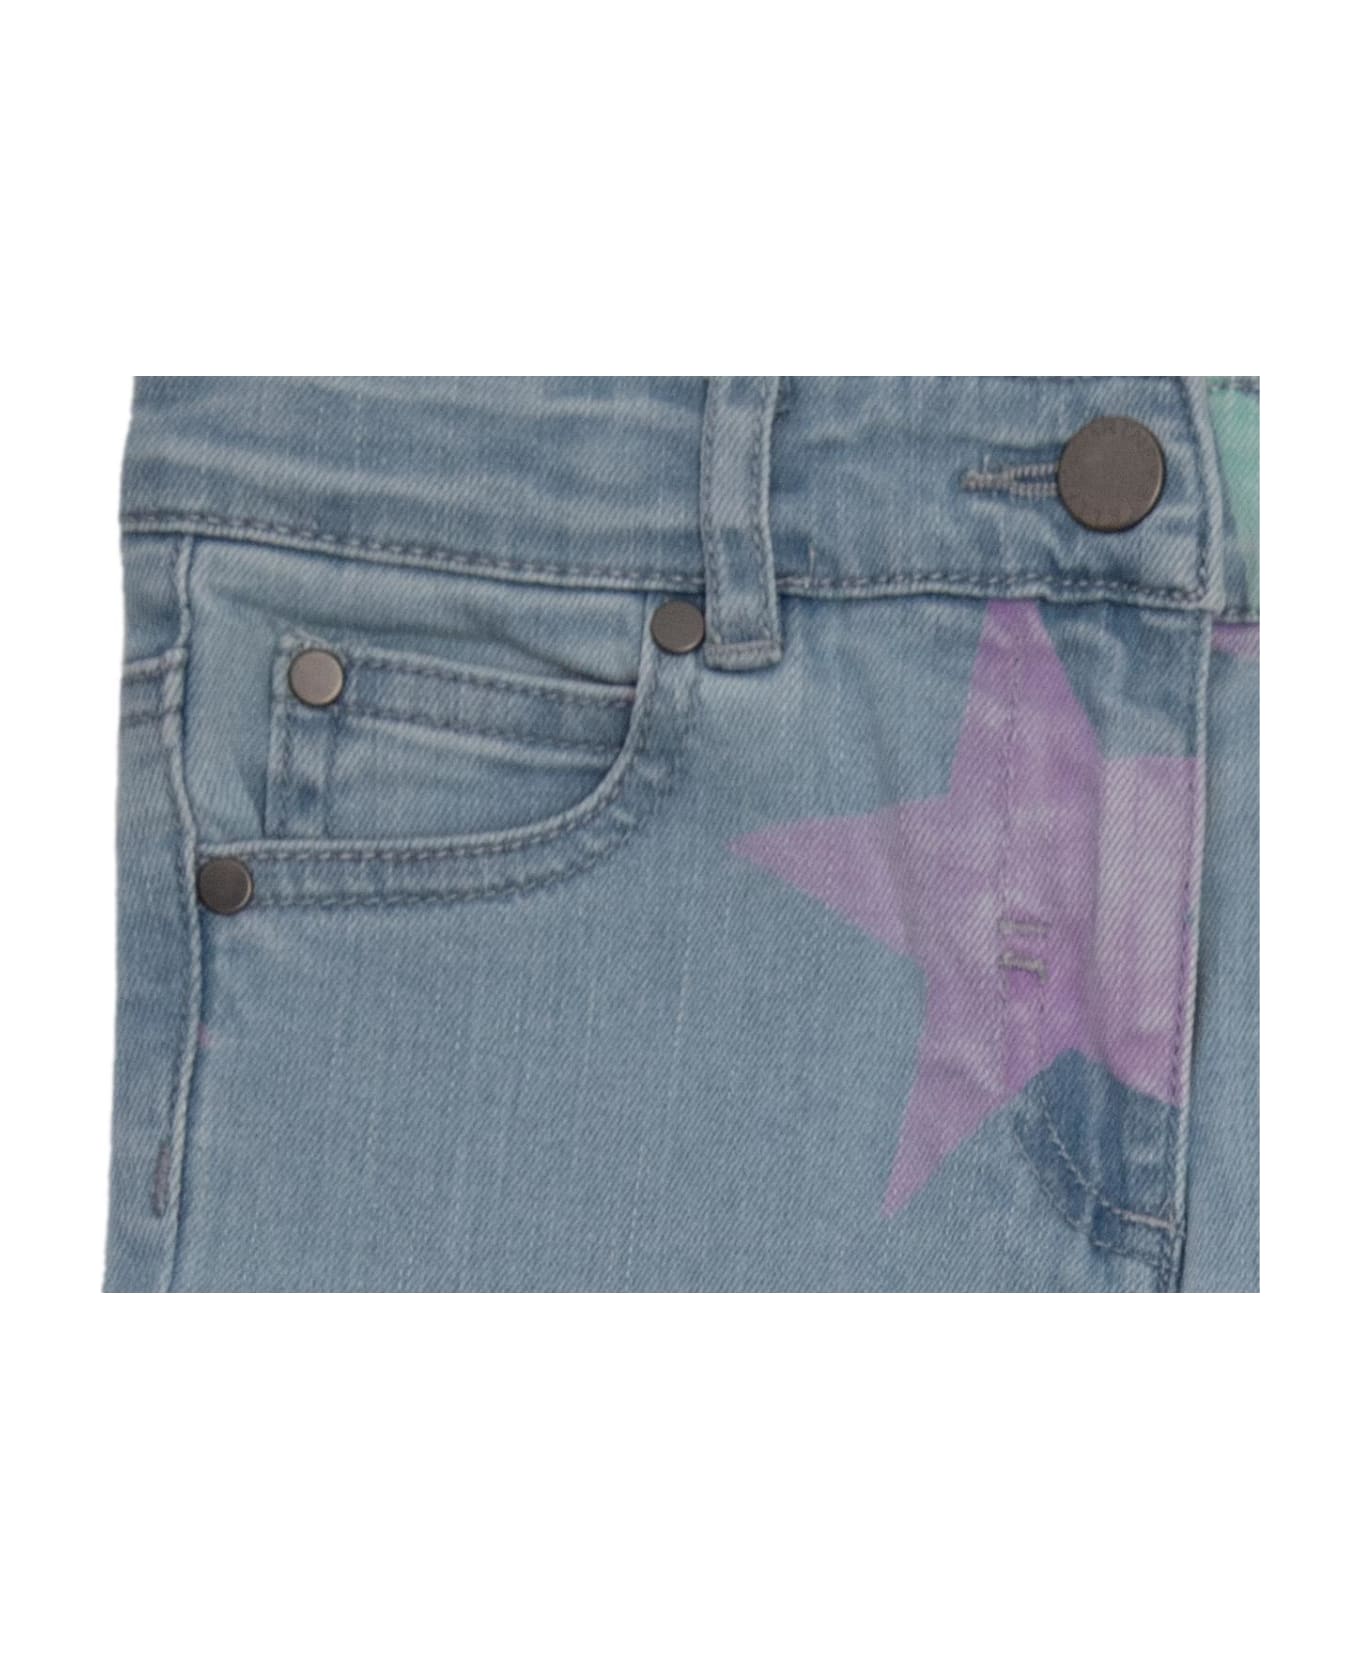 Stella McCartney Kids Jeans With Star Motif - Blu Denim